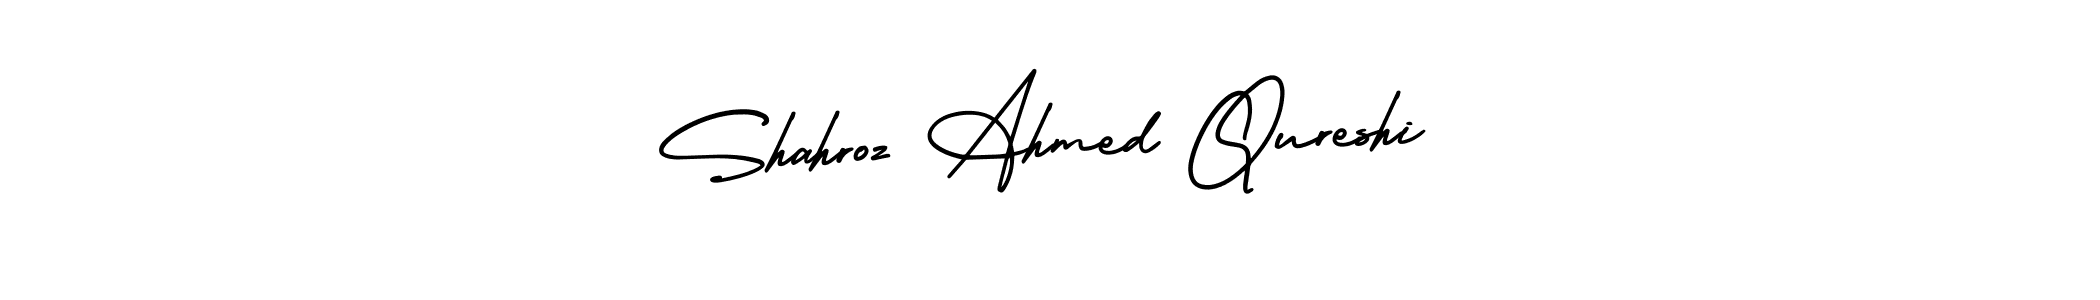 Best and Professional Signature Style for Shahroz Ahmed Qureshi. AmerikaSignatureDemo-Regular Best Signature Style Collection. Shahroz Ahmed Qureshi signature style 3 images and pictures png